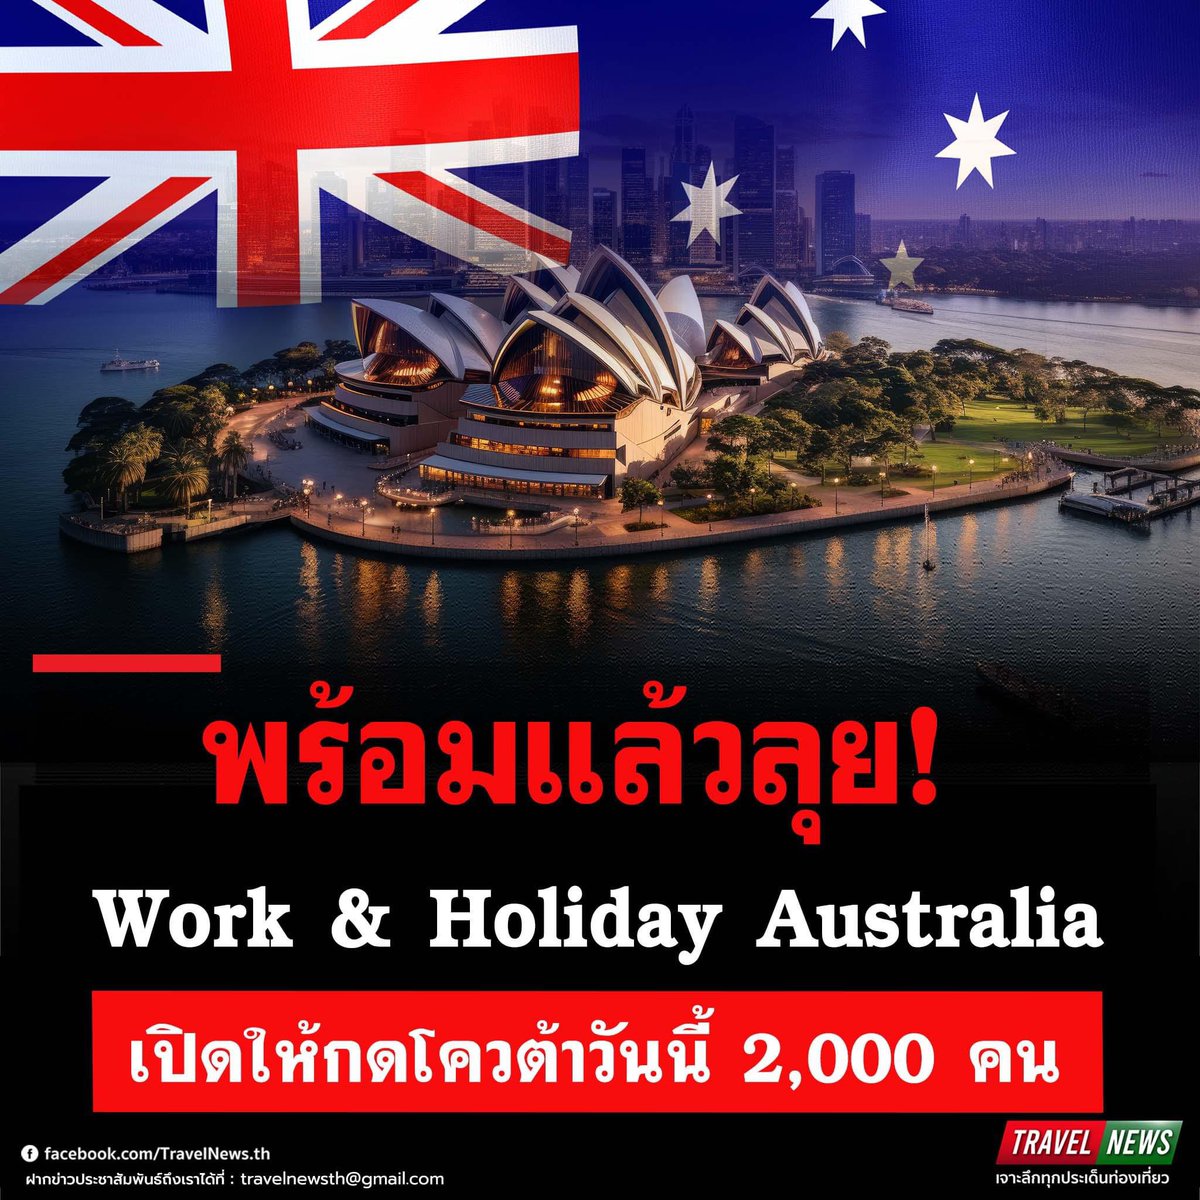 #TravelNews : พร้อมแล้วลุย! Work & Holiday Australia เปิดให้กดโควต้าวันนี้ 2,000 คน facebook.com/share/p/Mgq87V…

#Travel #News #WorkAndHoliday #ออสเตรเลีย